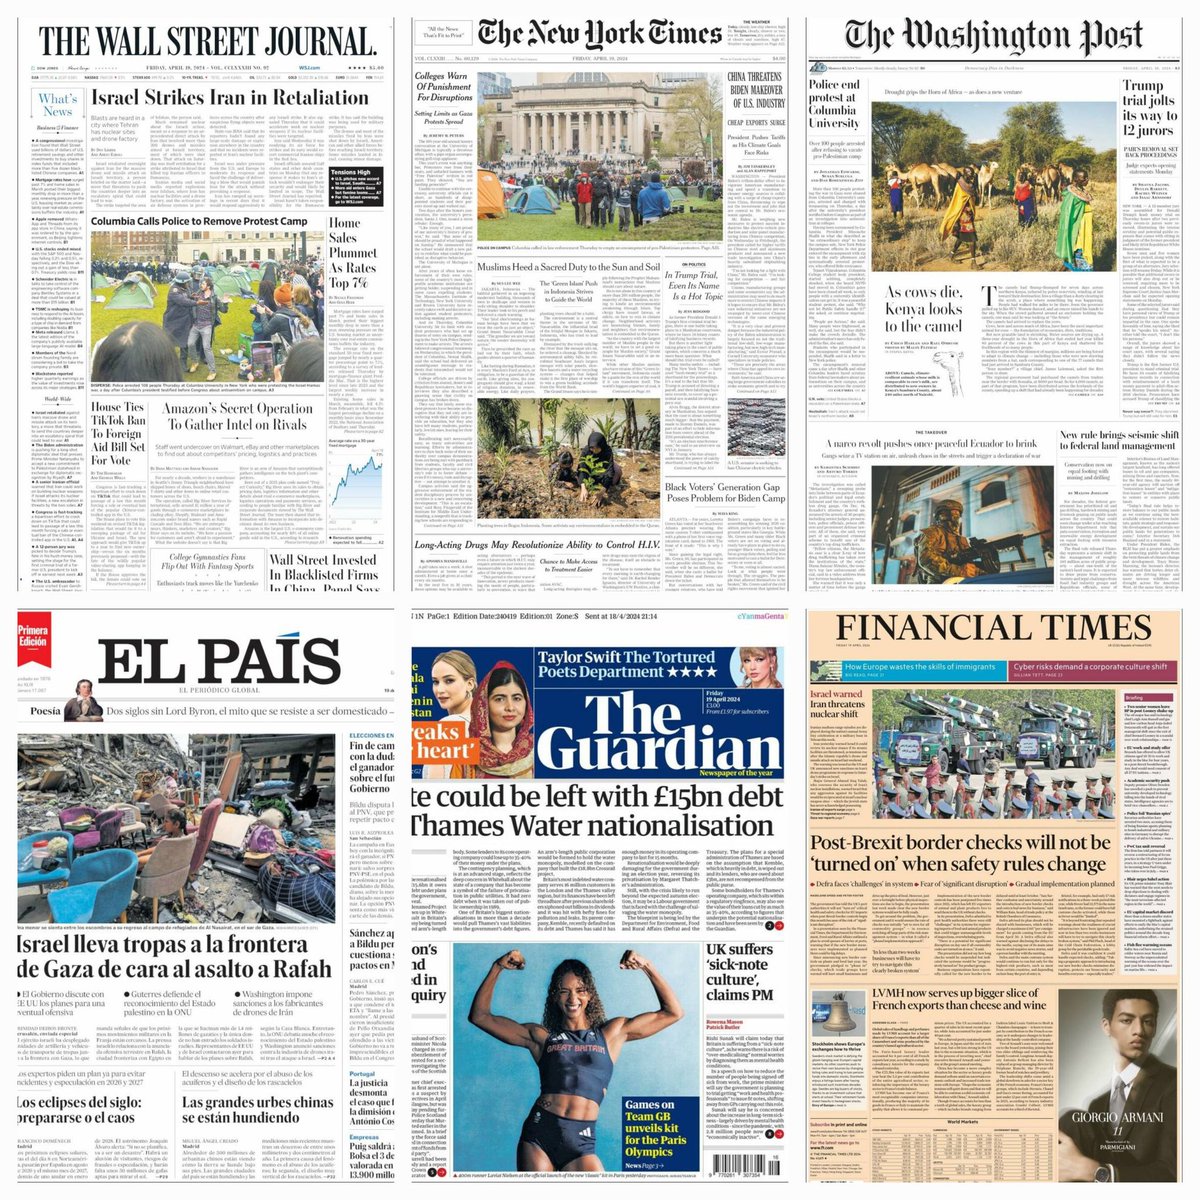 Periódicos en el mundo... #TheWallstreetJournal #Thenewyorktimes #Thewashingtonpost #TheGuardian #ElPaís #Financialtimes #news #newspaper #april19